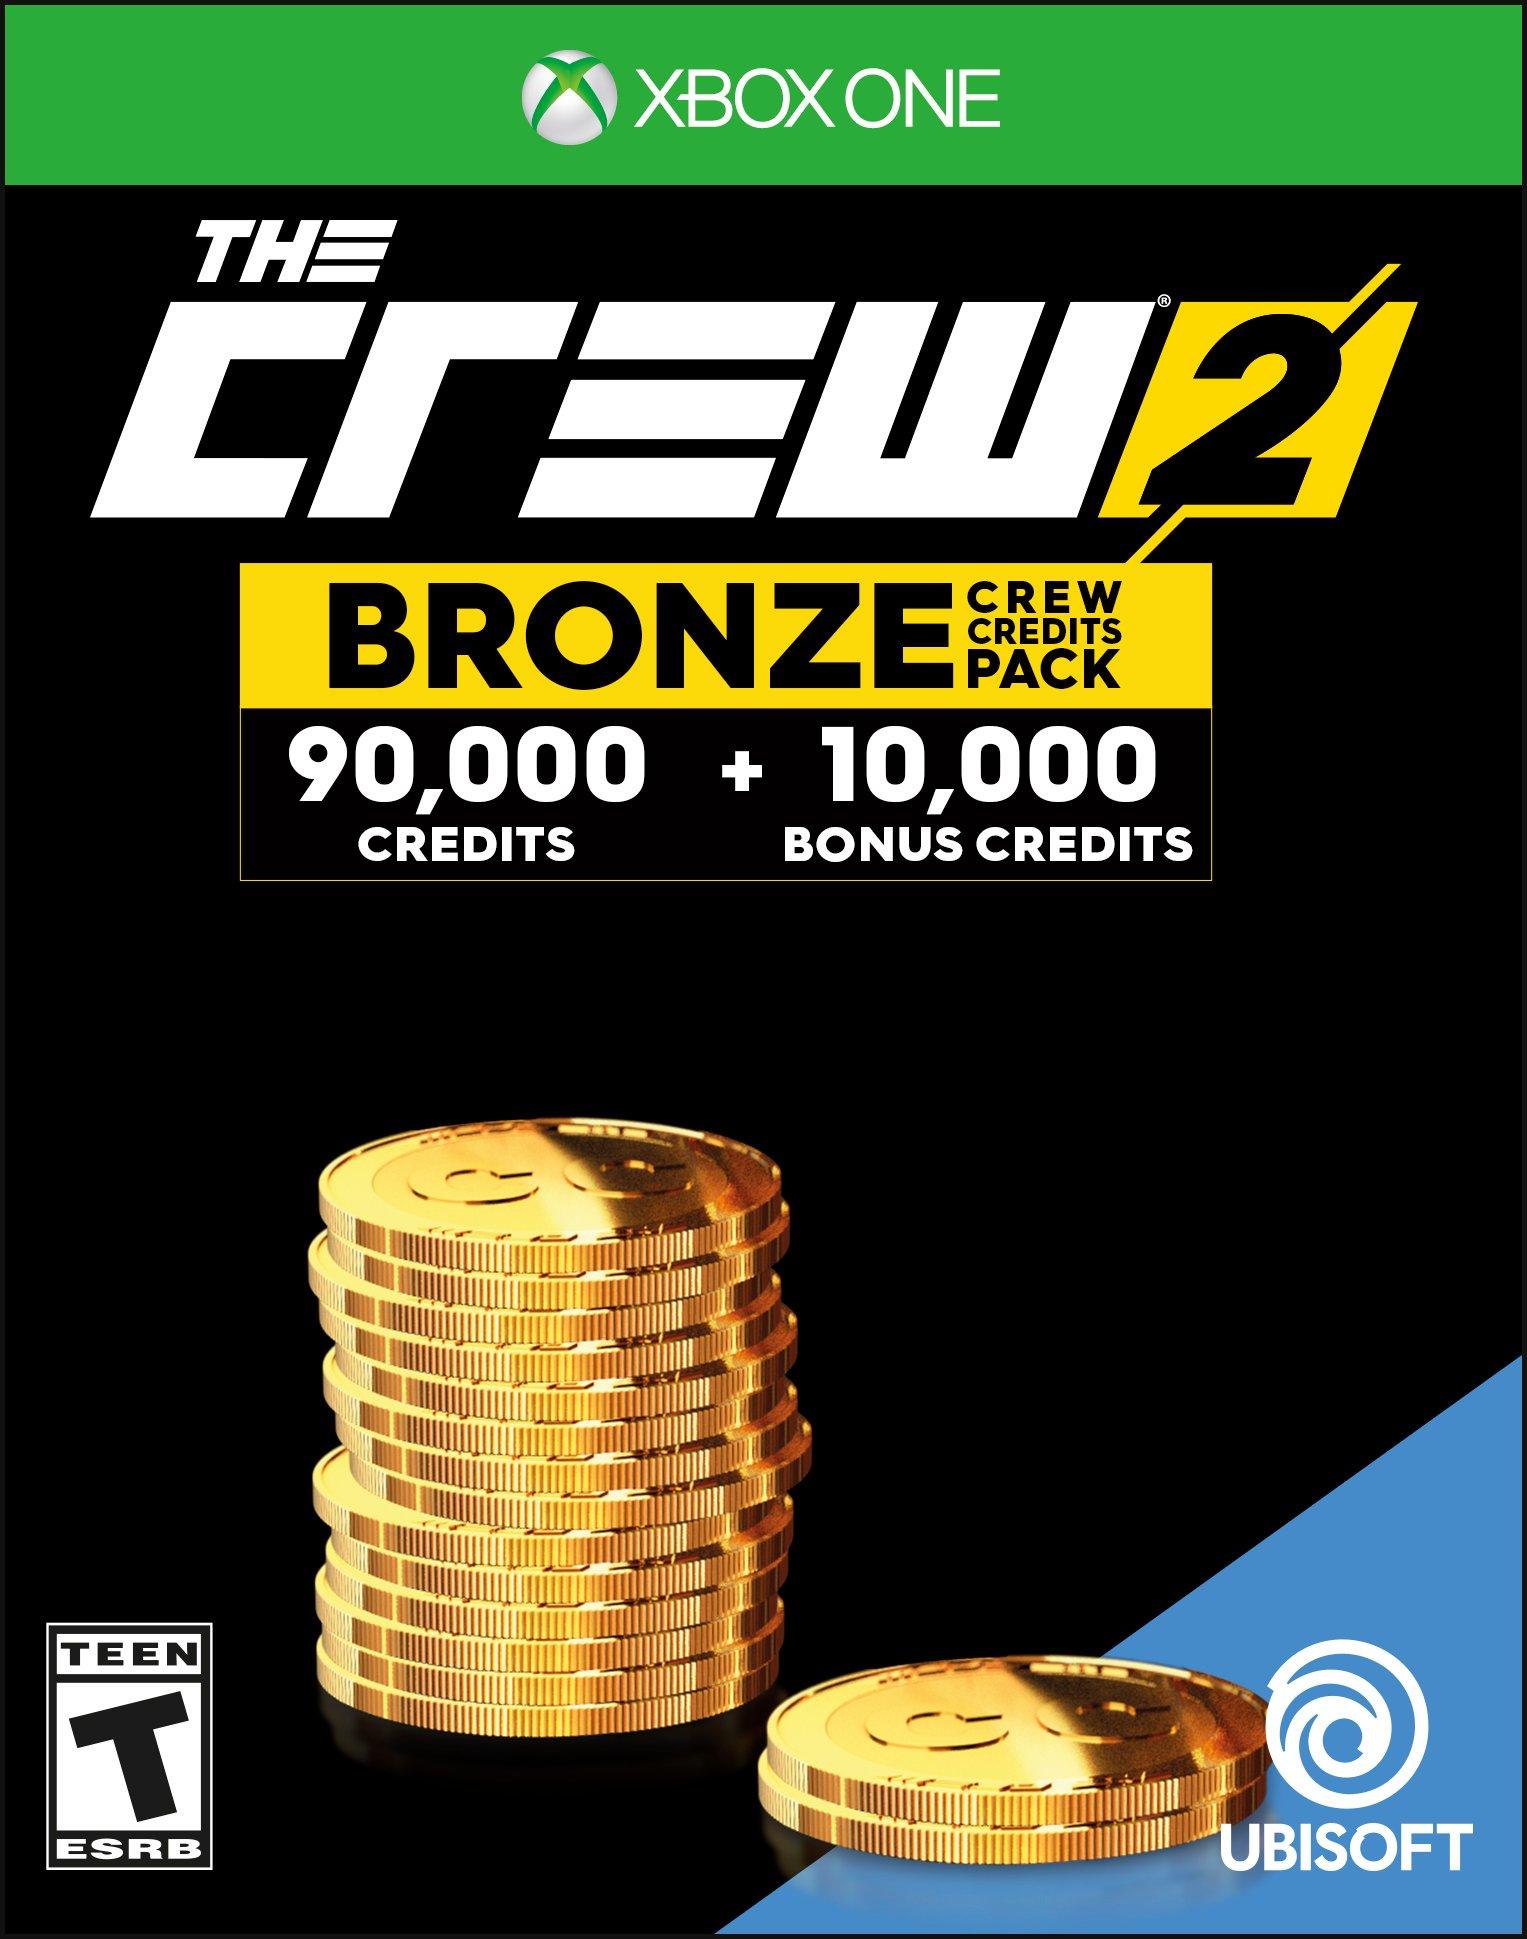 | 2 Crew | - One GameStop Bronze One Credit Pack Xbox The Xbox